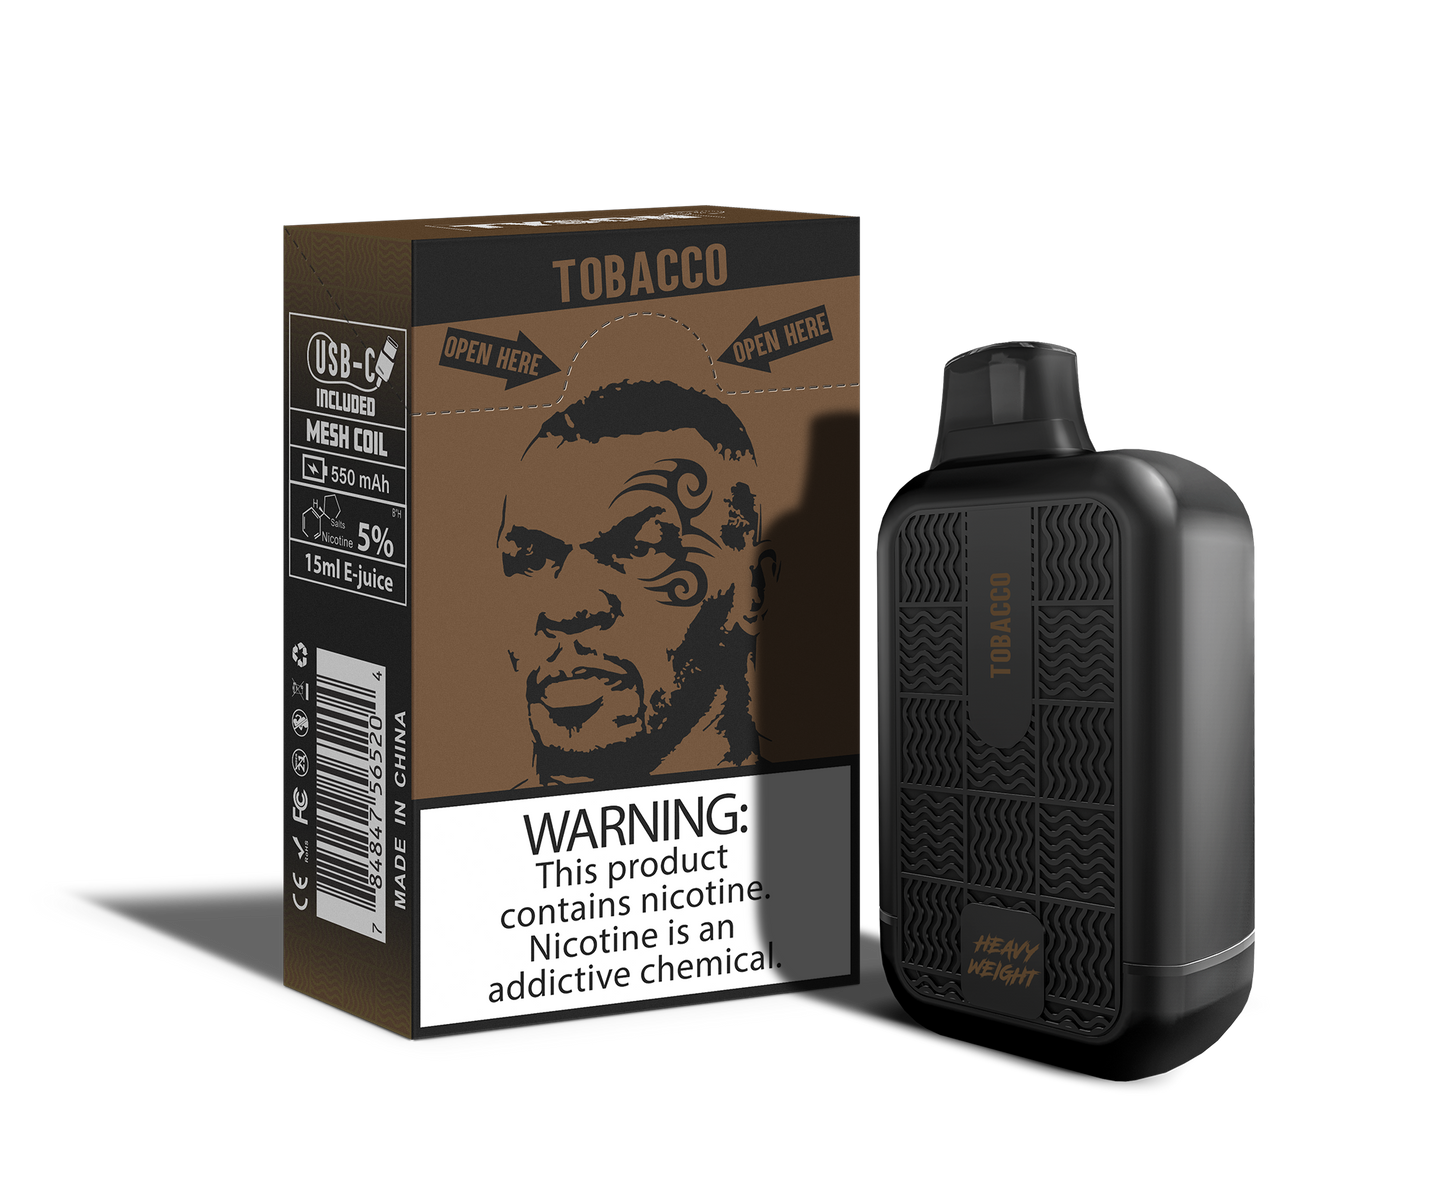 Tyson 2.0 Heavyweight 7000 Puffs Disposable Vape - Tobacco